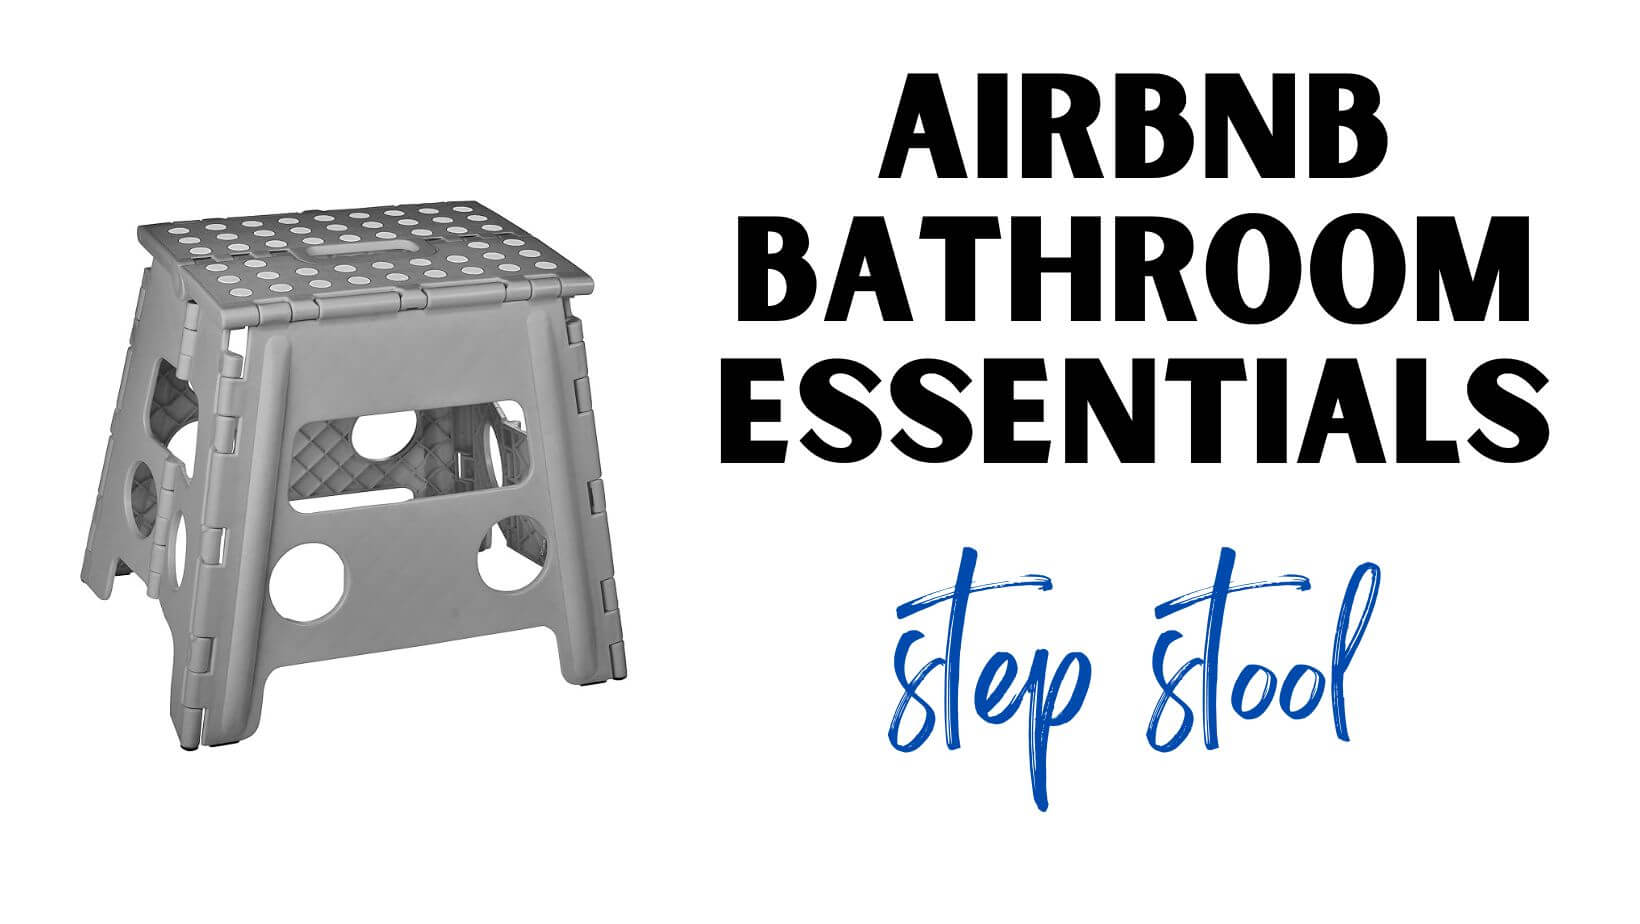 Airbnb Bathroom Essentials Step Stool